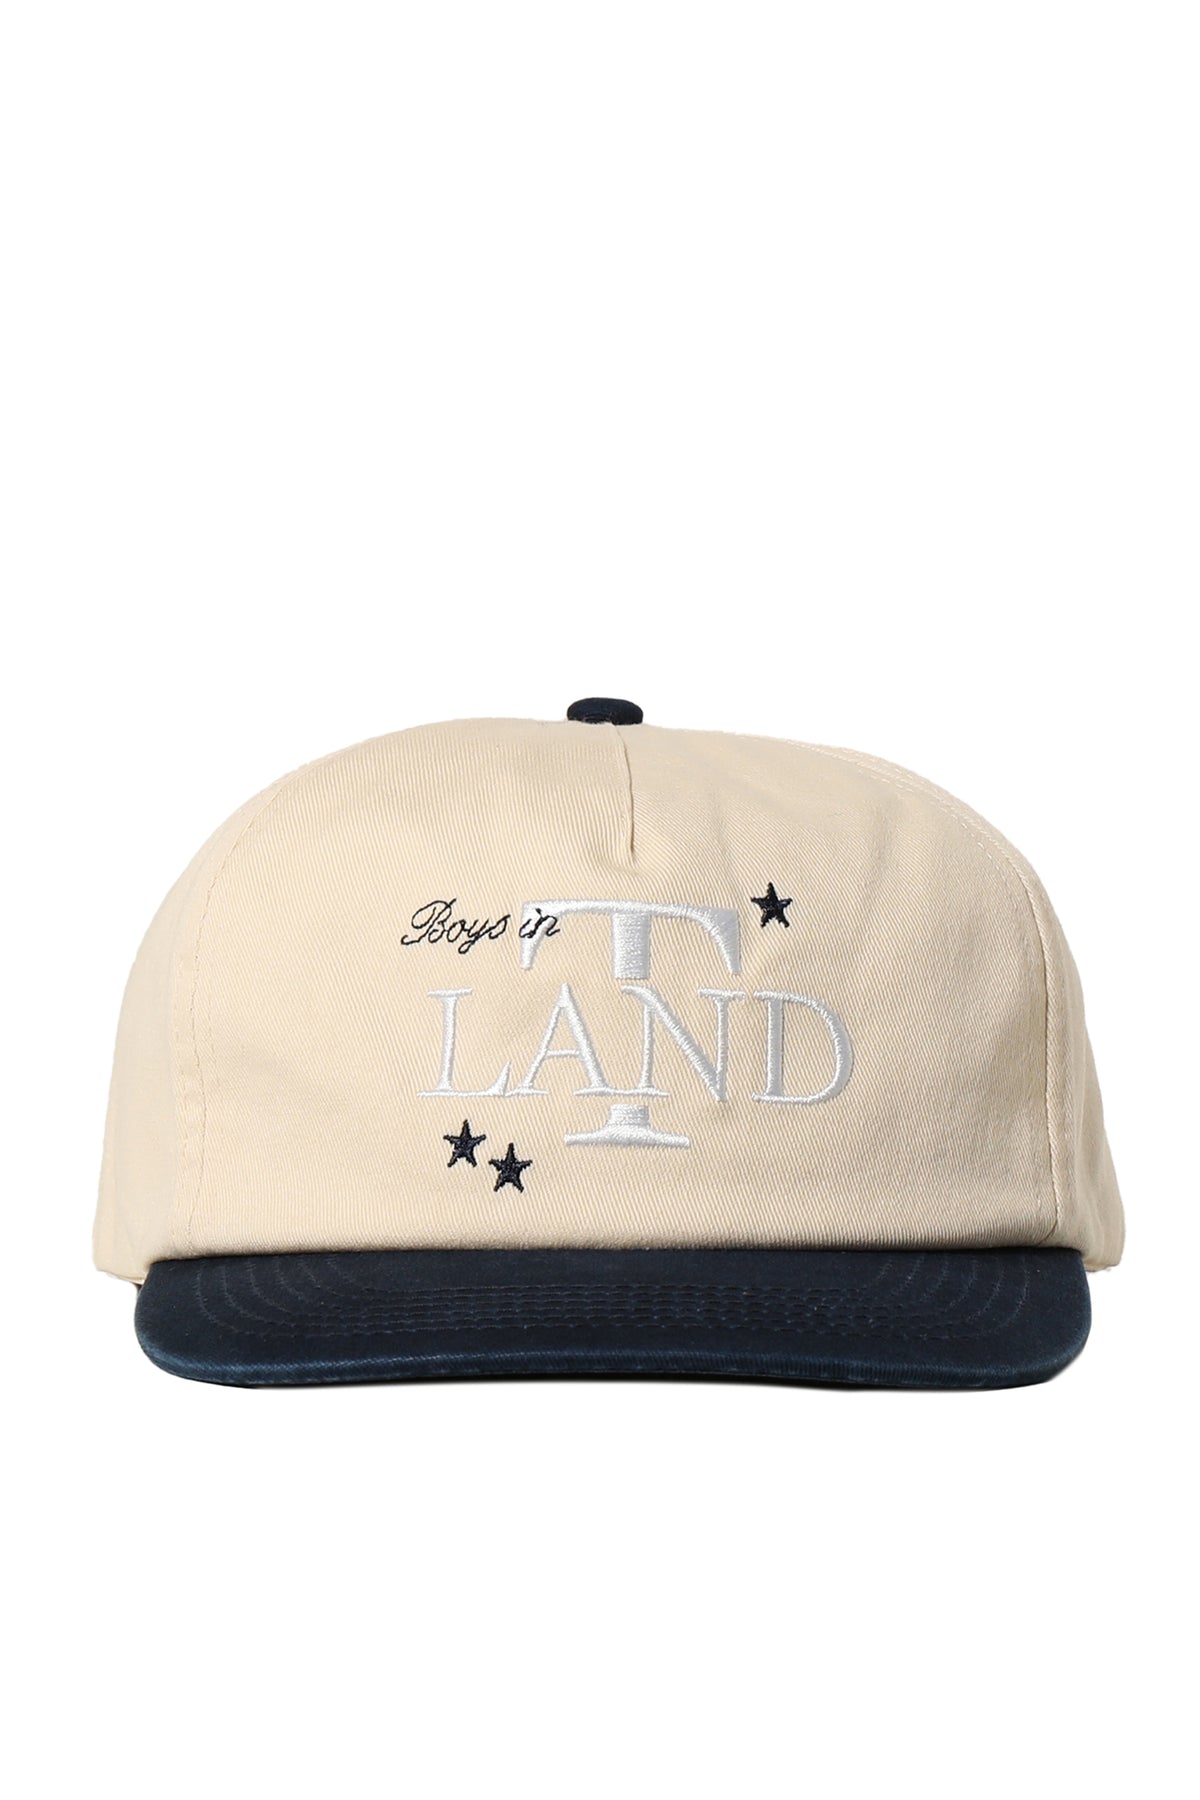 T-LAND CAP / NVY